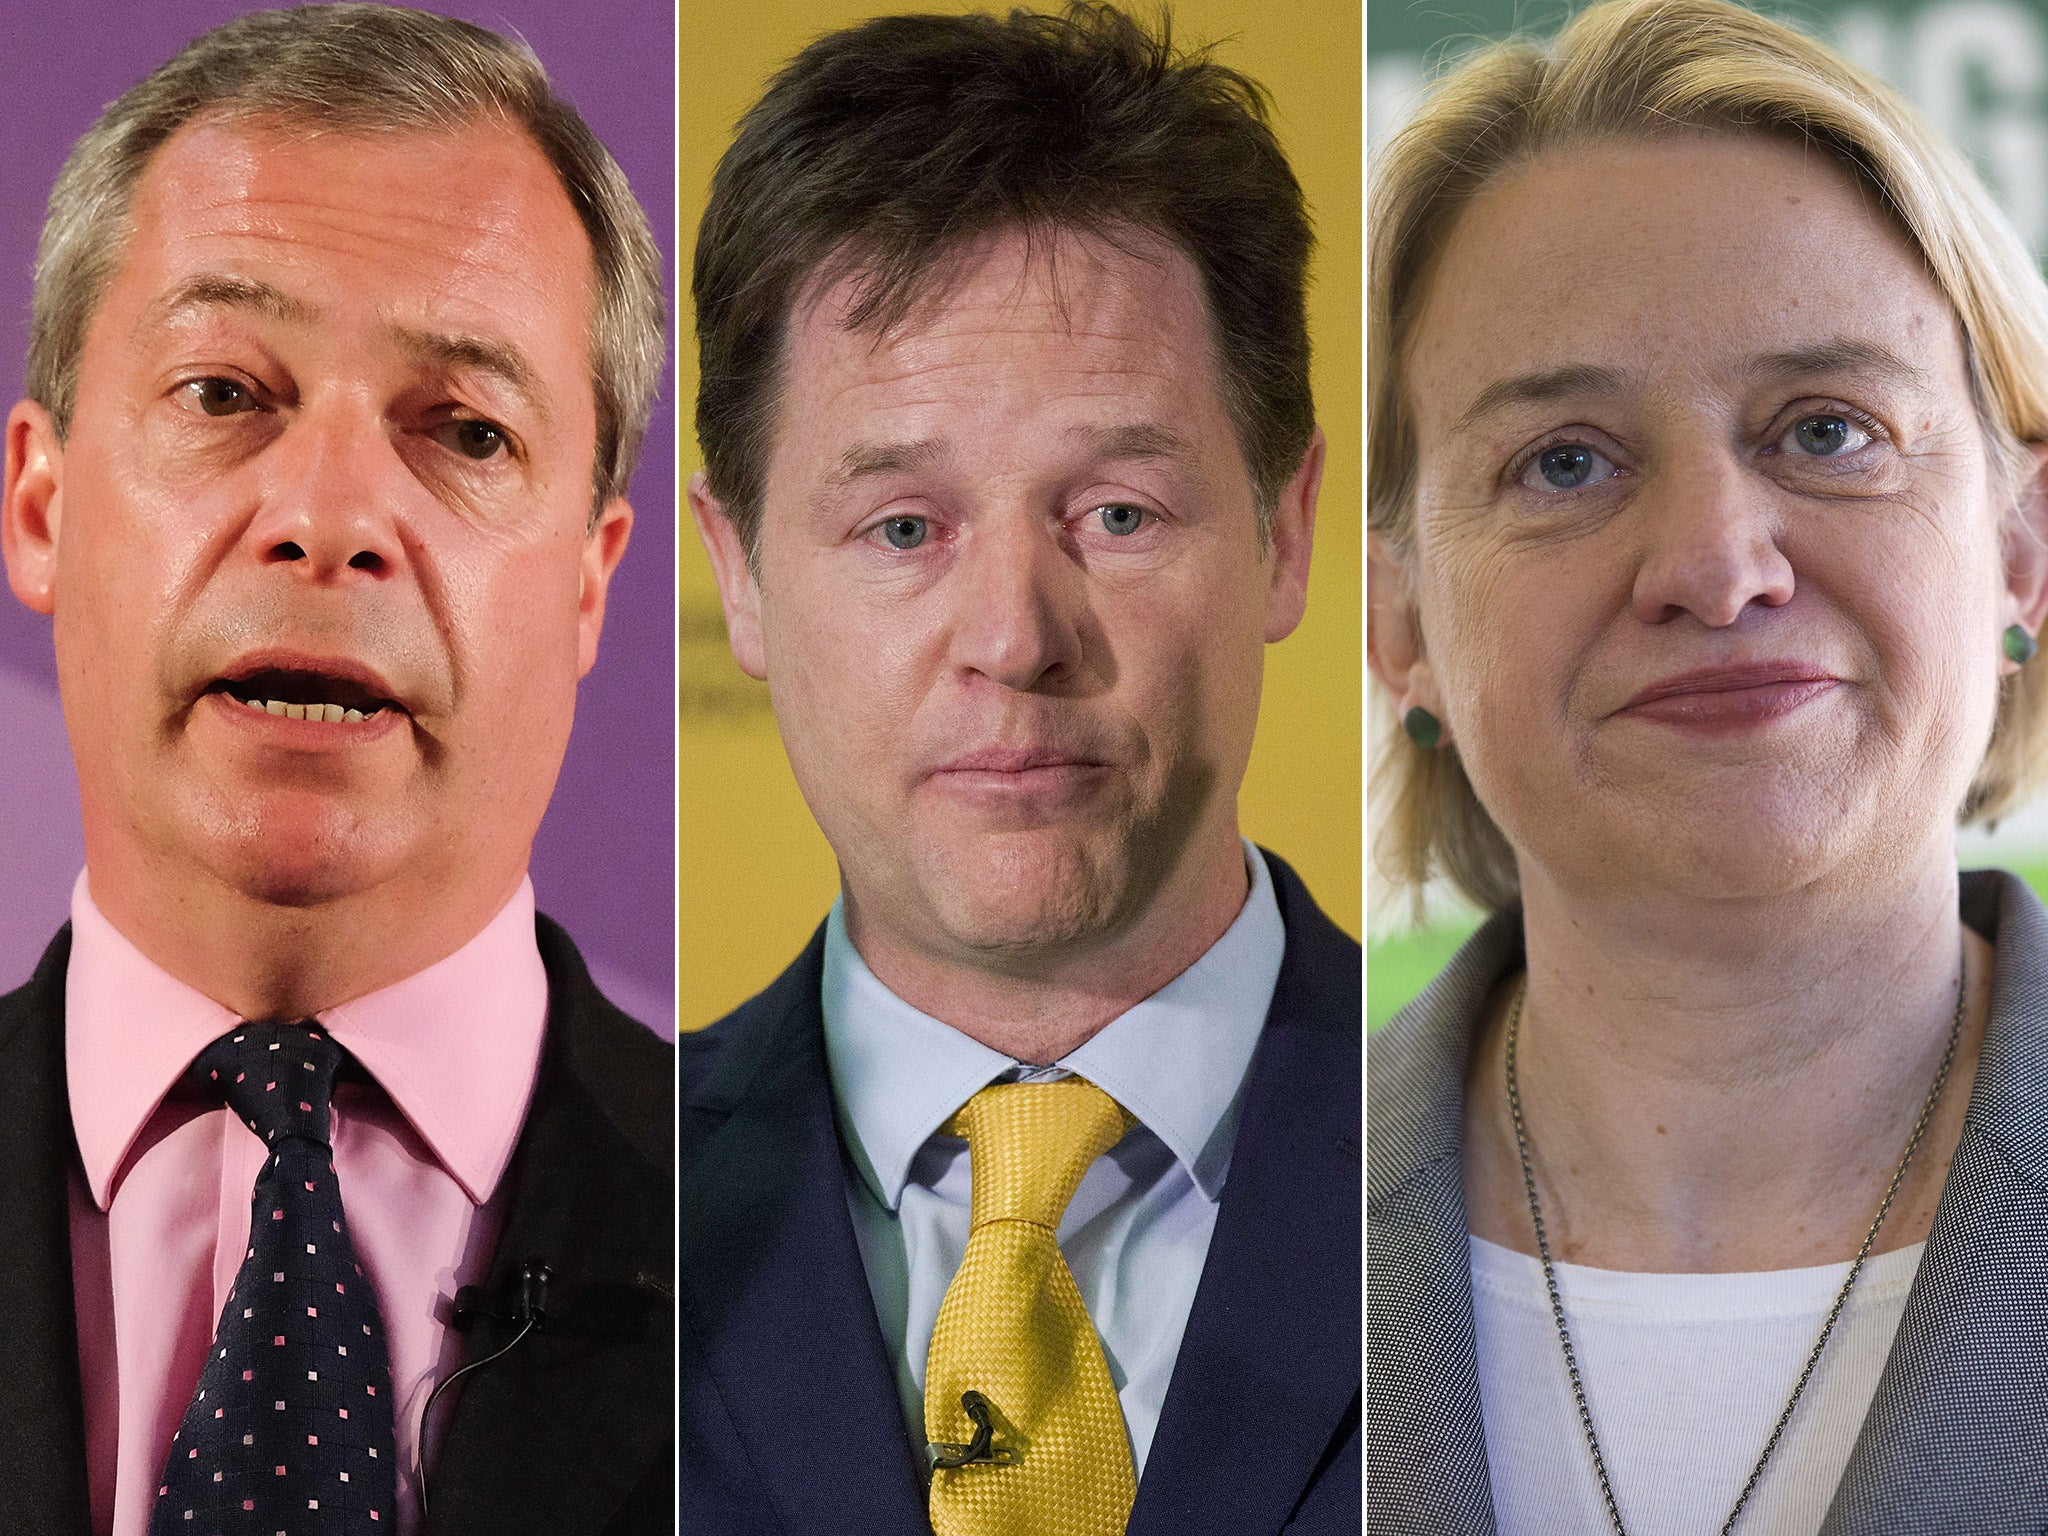 Nigel Farage, Nick Clegg and Natalie Bennett